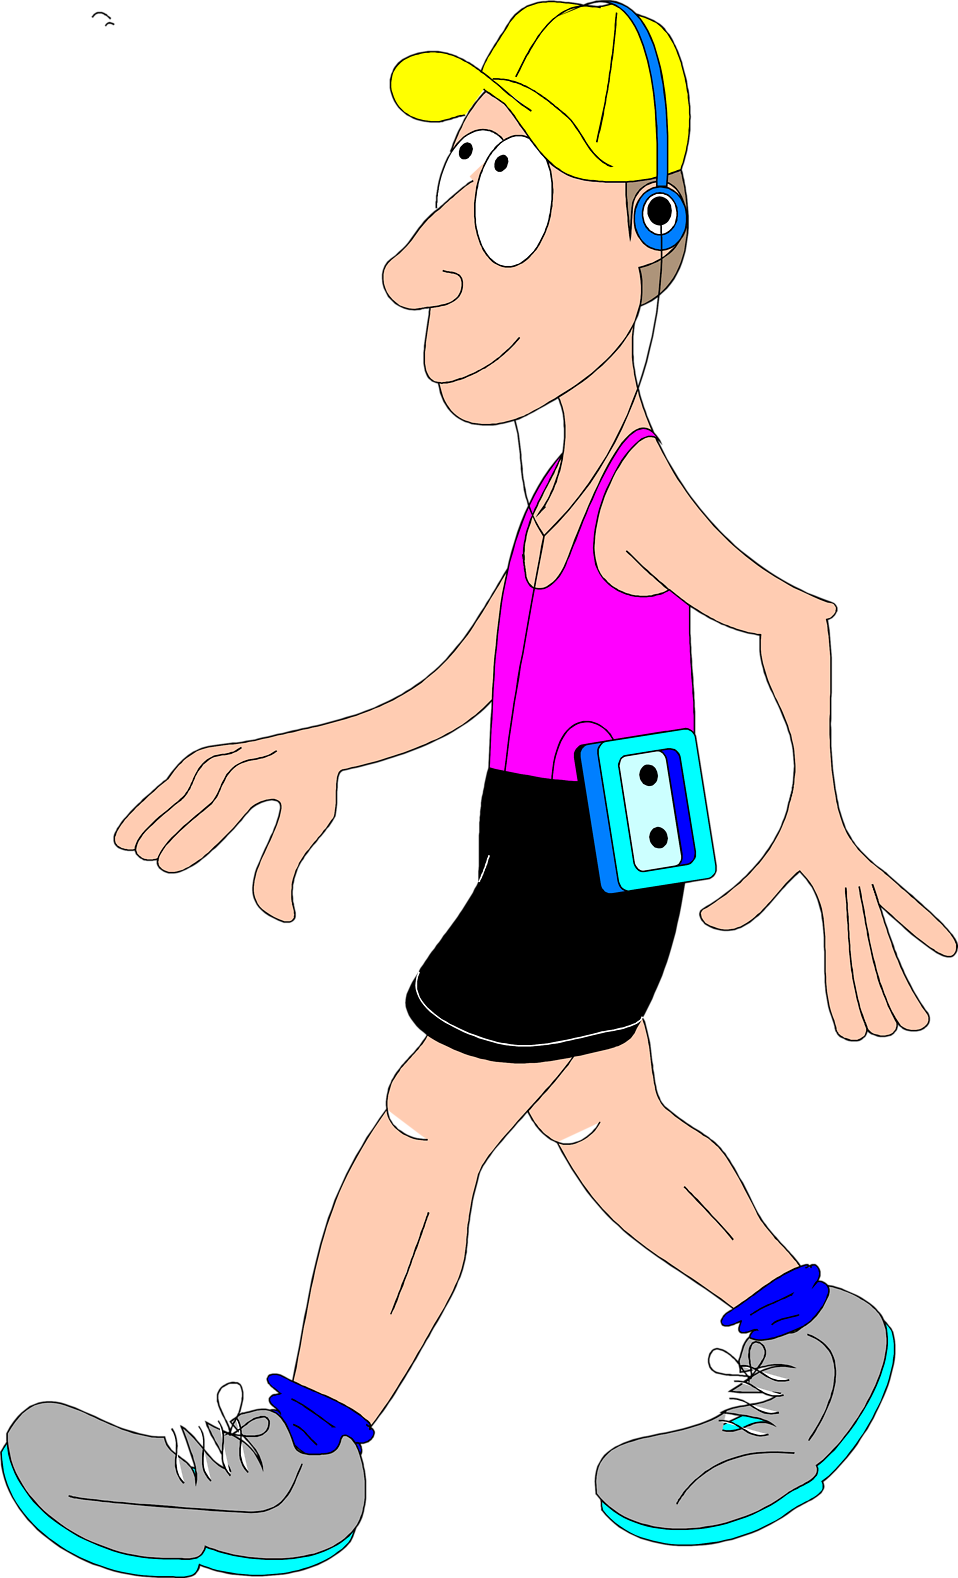 Free stock photo illustration. Exercising clipart exercise man